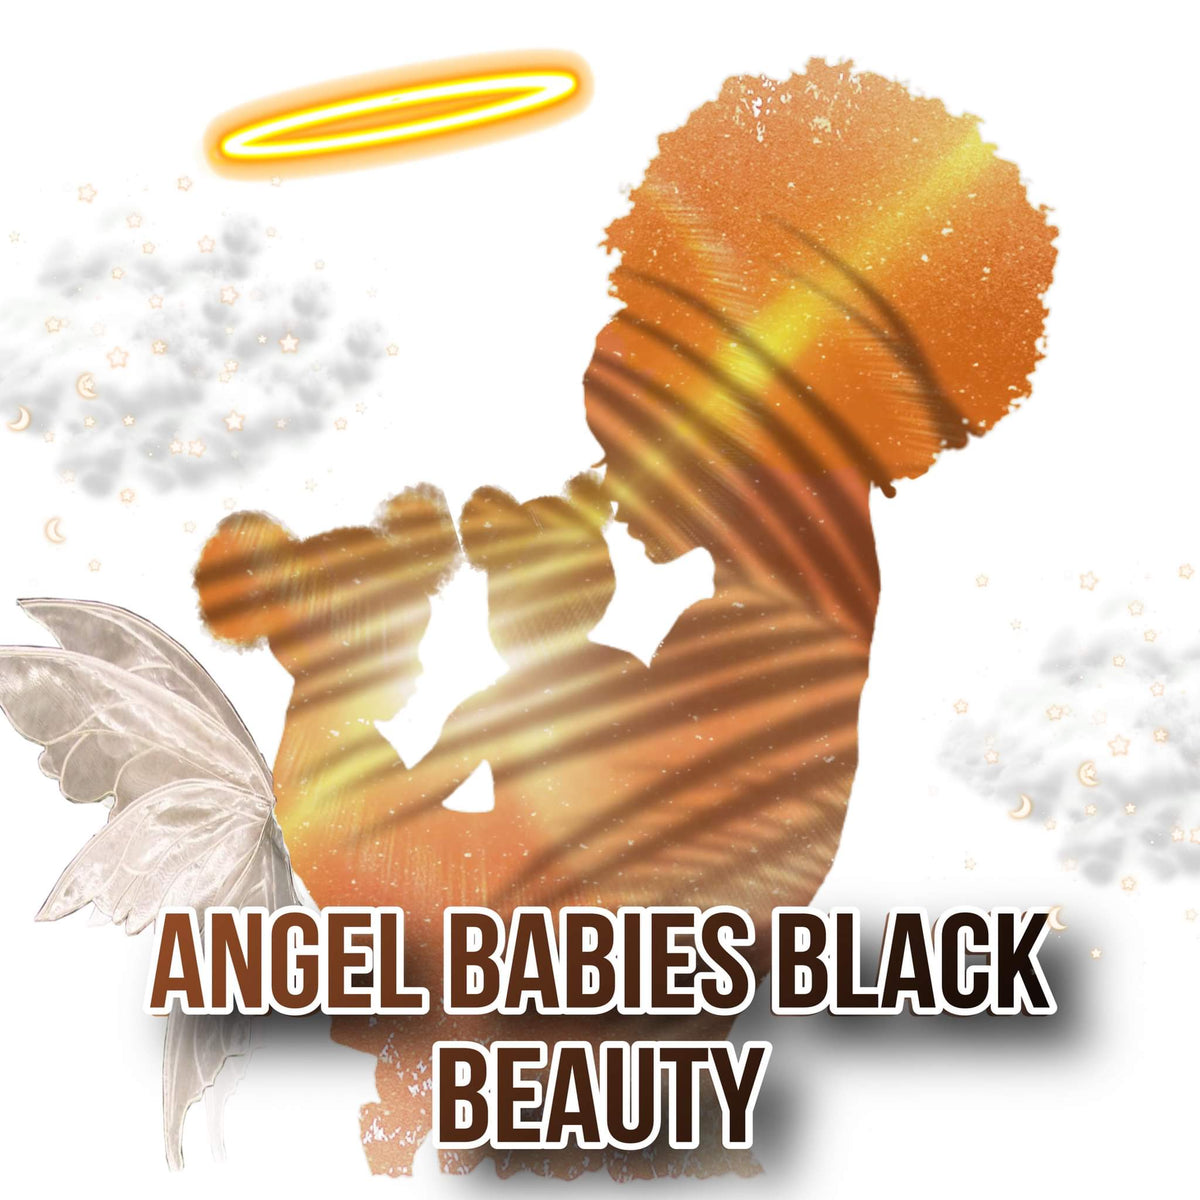 Angel Babies Black Beauty